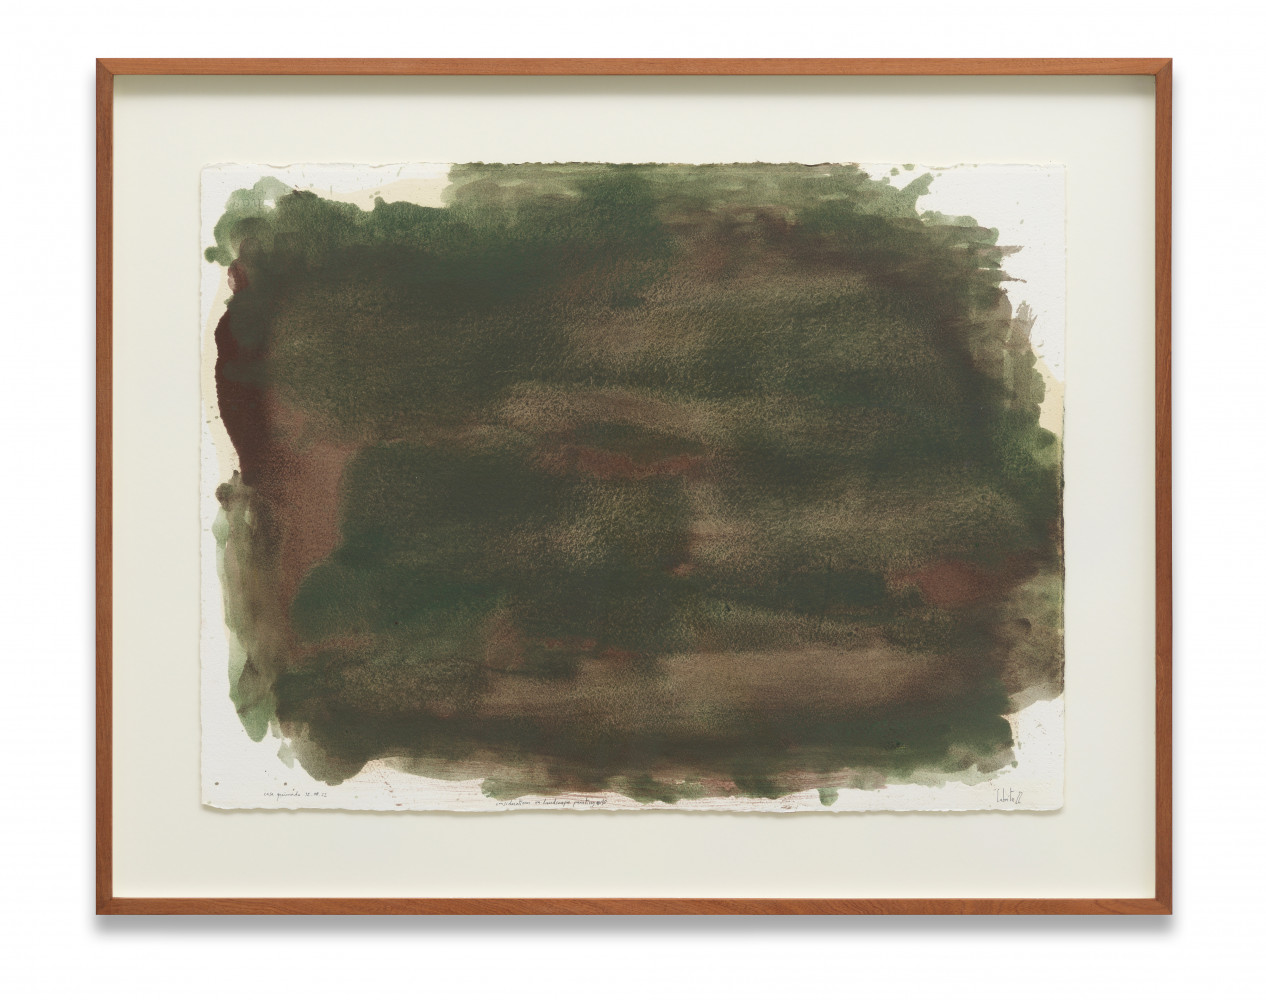 Pedro Cabrita Reis, ‘Considerations on landscape painting #10’, 2022, Öl auf 640g Arches Aquarellpapier